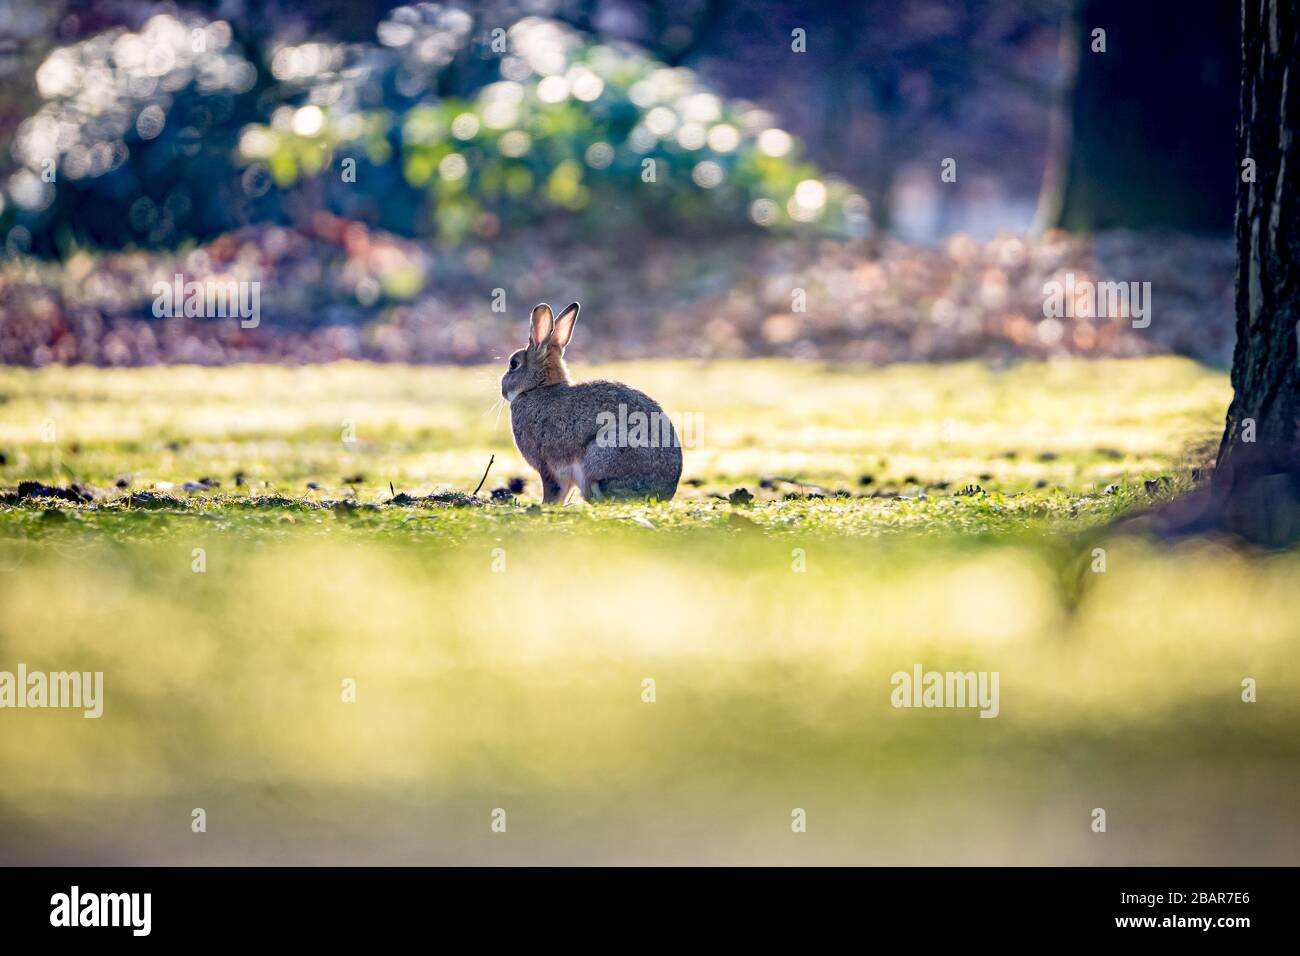 European Wild rabbit (Oryctolagus cuniculus) in lovely green vegetation Stock Photo